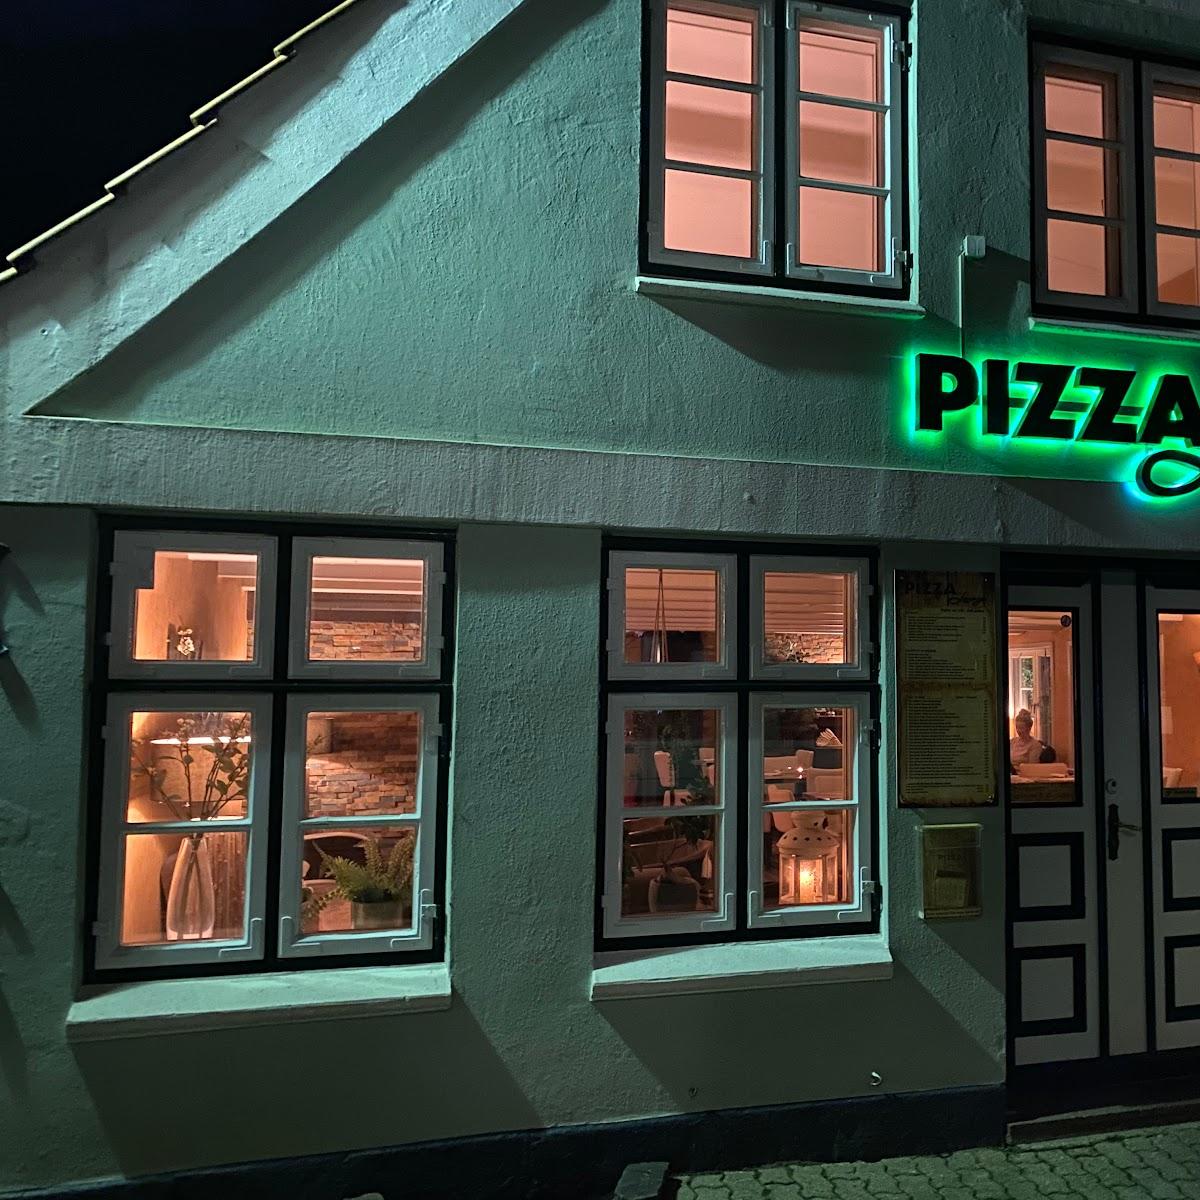 Restaurant "Pizza Lounge Lieferservice" in Kappeln